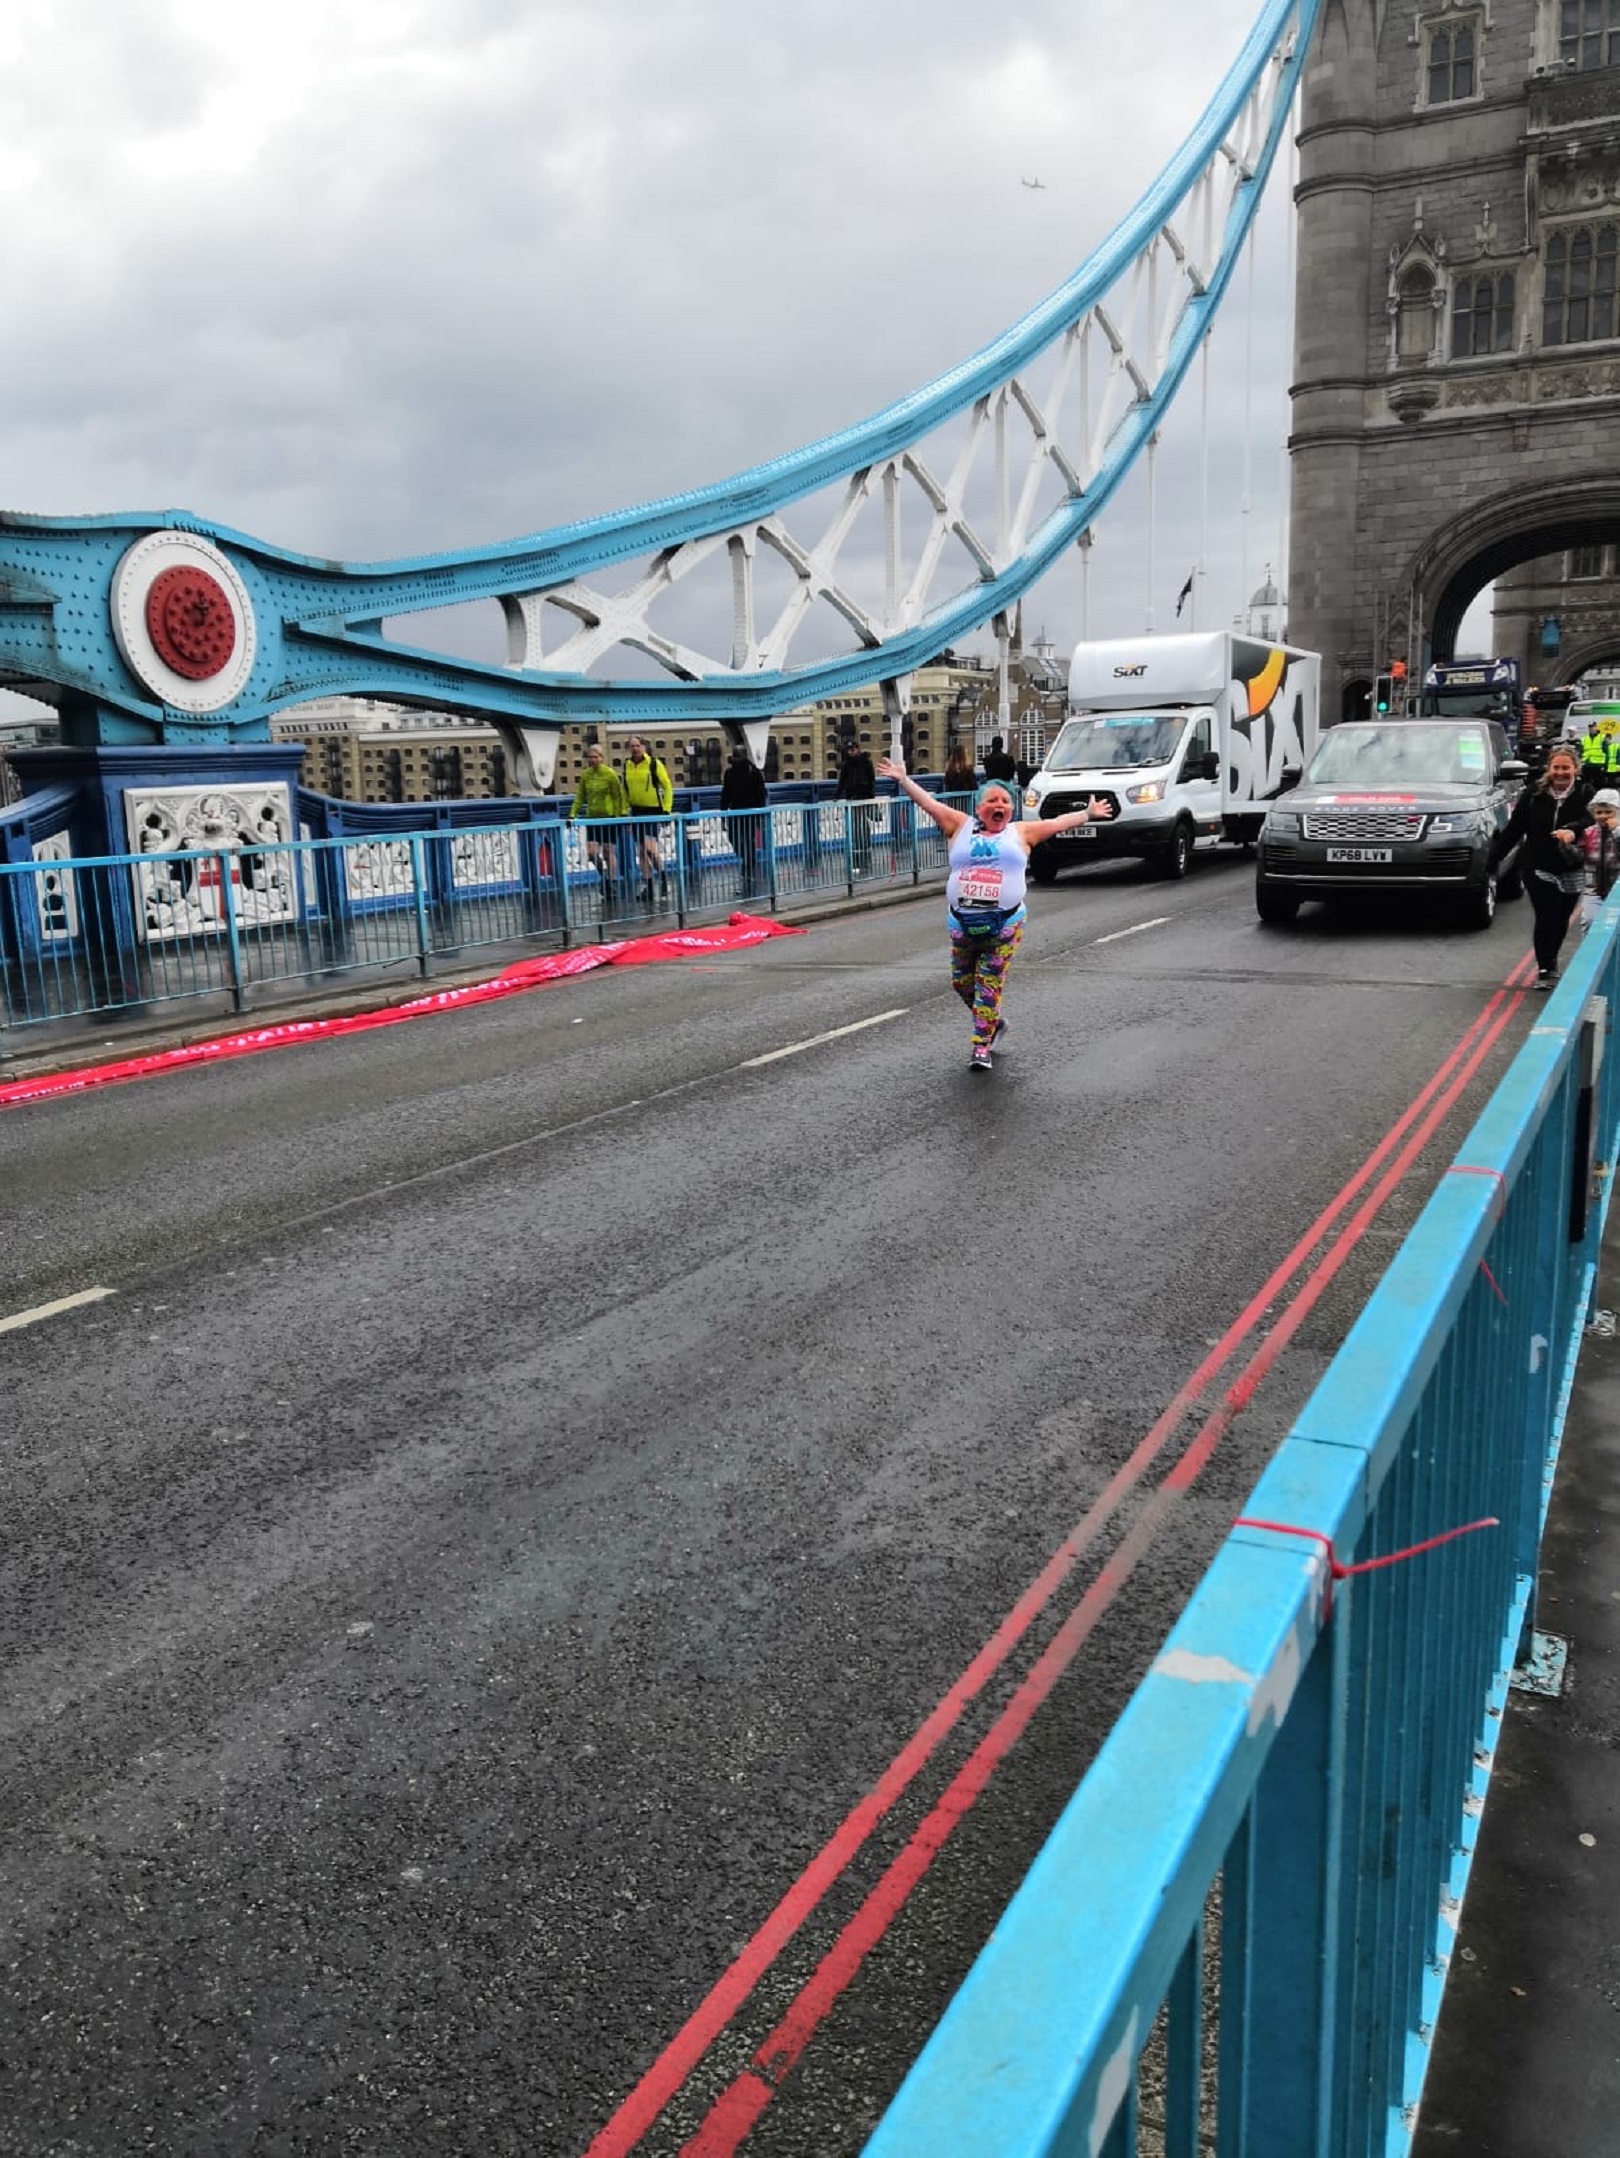 Kerrie Aldridge, who witnessed abuse during the 2019 London Marathon, running